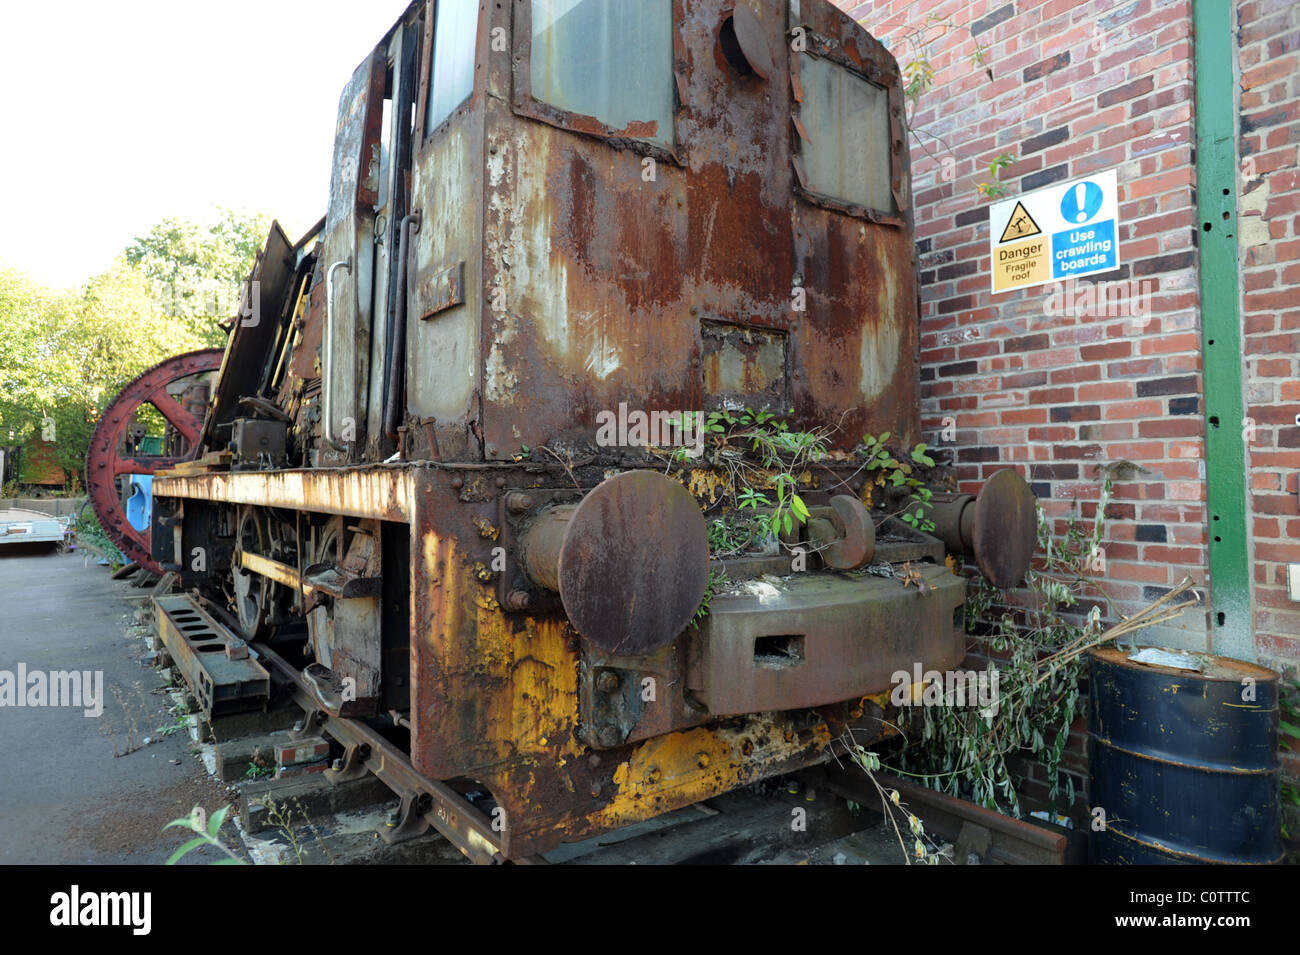 Rusty old steam engine at Kelham island, Sheffield Stock Photo